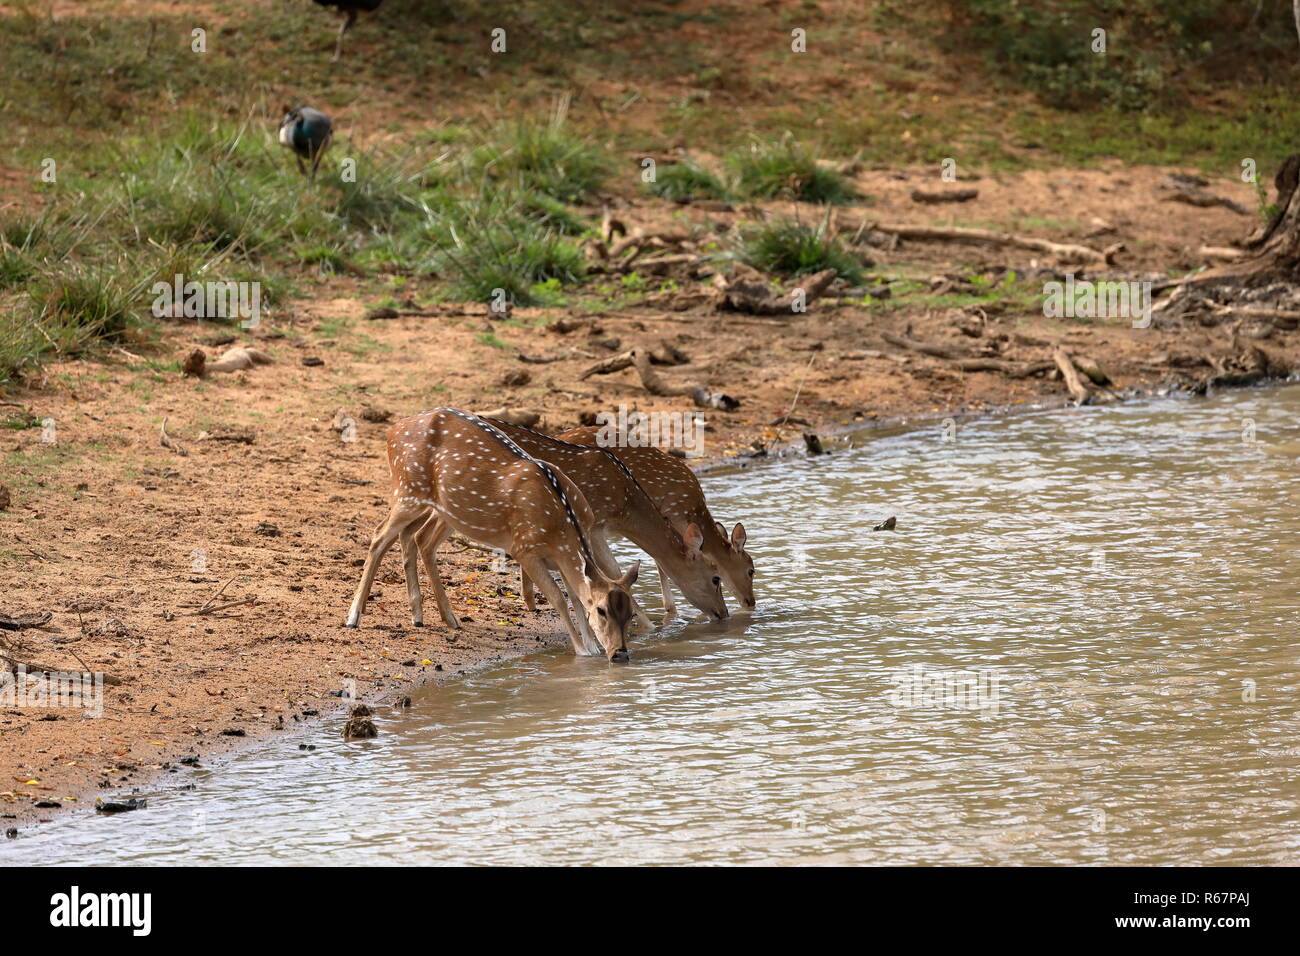 Ax Hirsch in Yala National Park in Sri Lanka Stockfoto